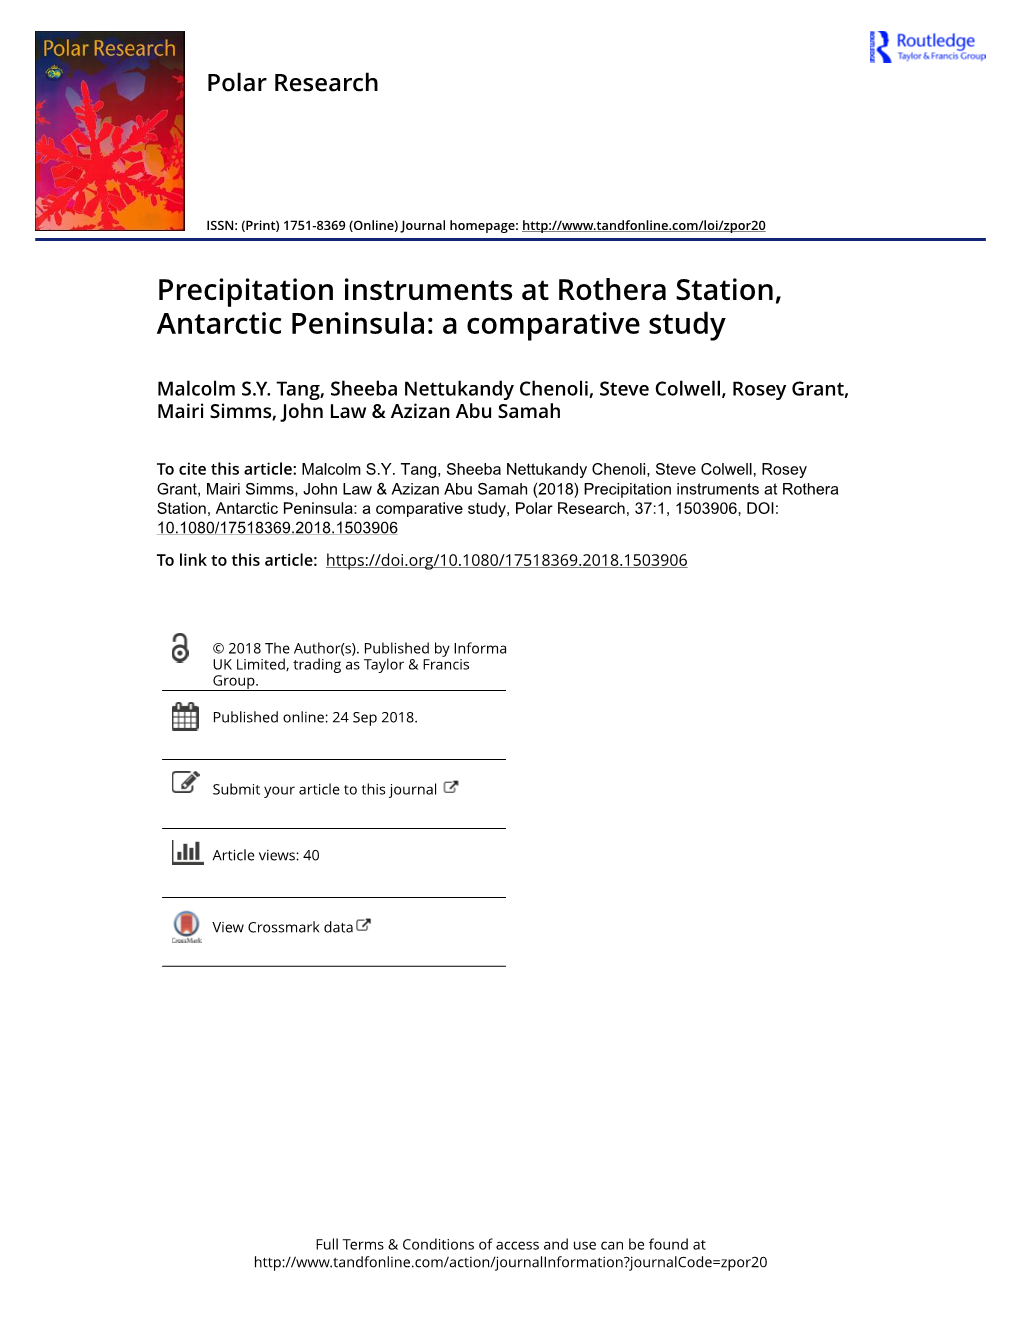 Precipitation Instruments at Rothera Station, Antarctic Peninsula: a Comparative Study